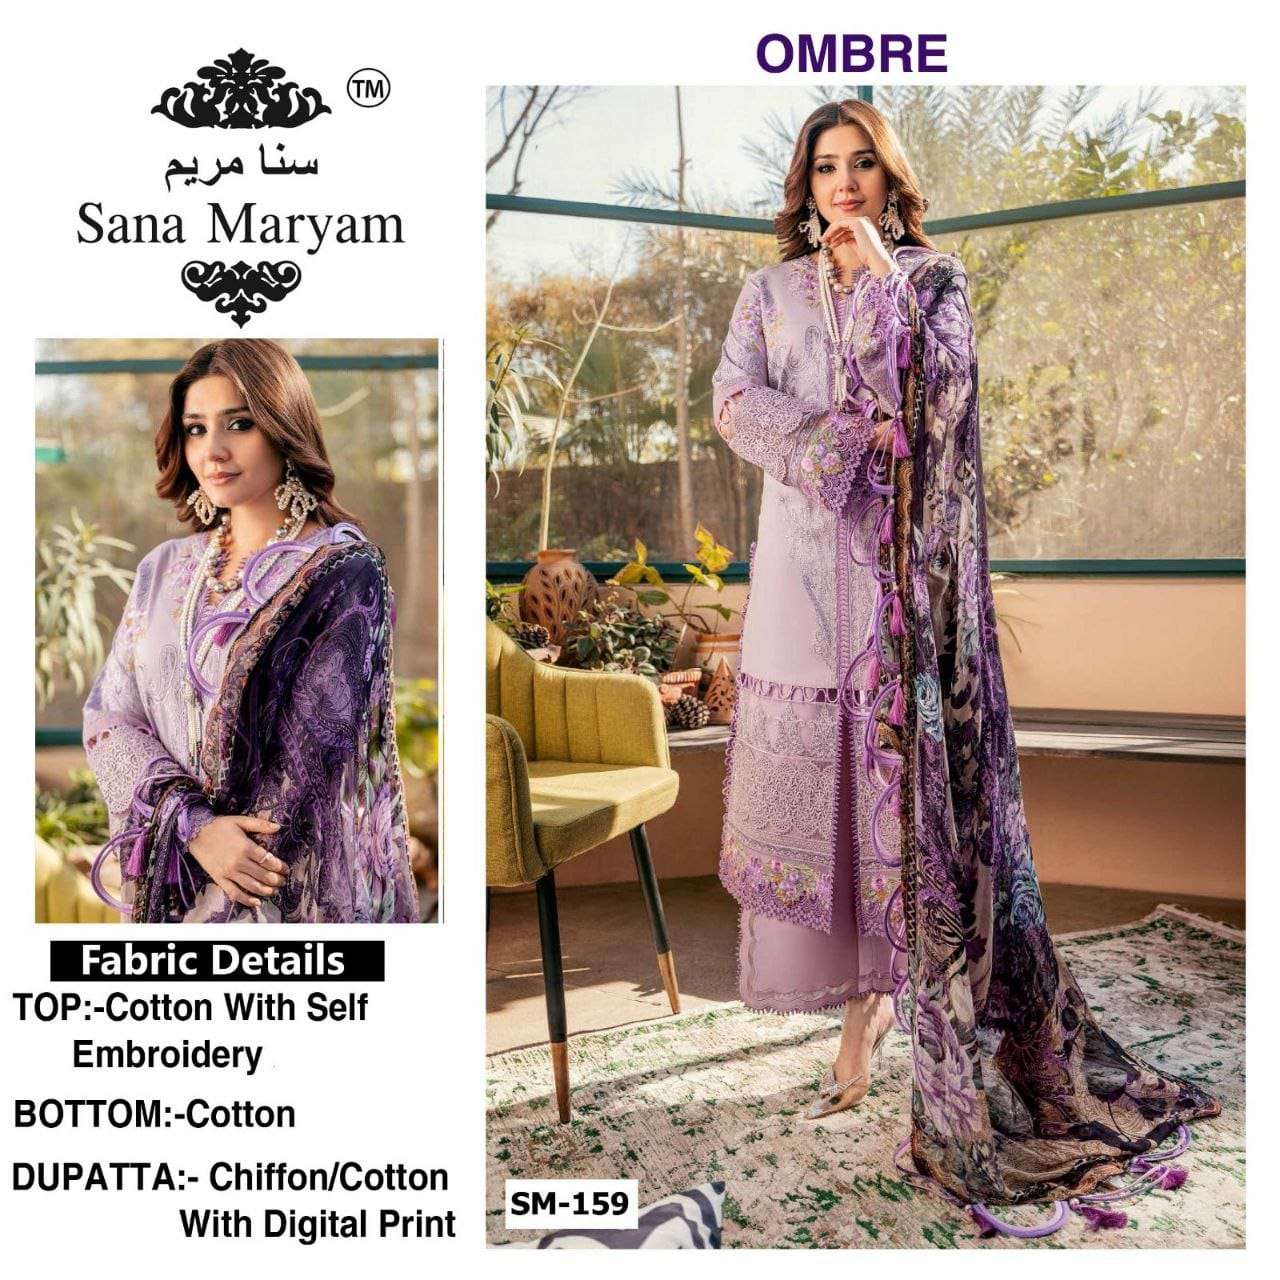 OMBRE SM-159 HIT DESIGN BY SANA MARYAM COTTON EMBROIDERY PAKISTANI DRESS